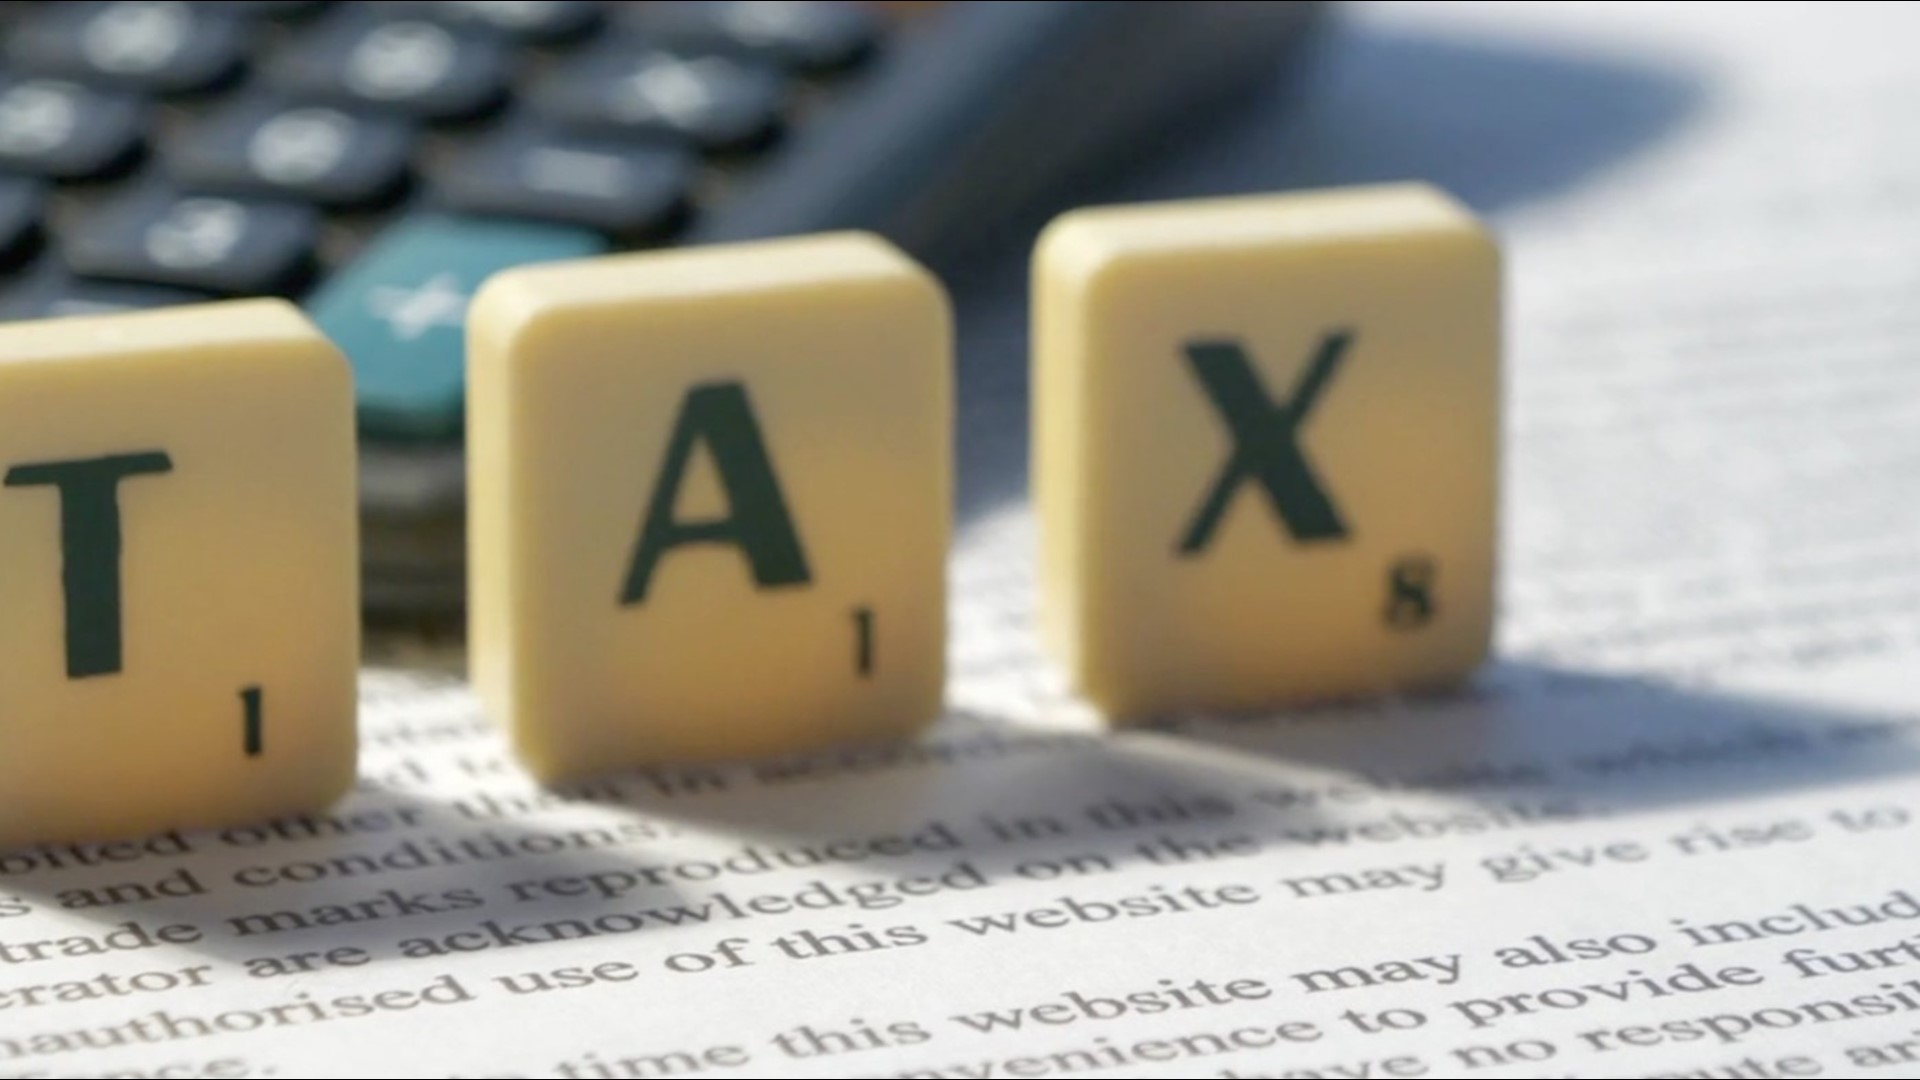 Veuer's Elizabeth Keatinge shares some tips on how to slash your tax bill.